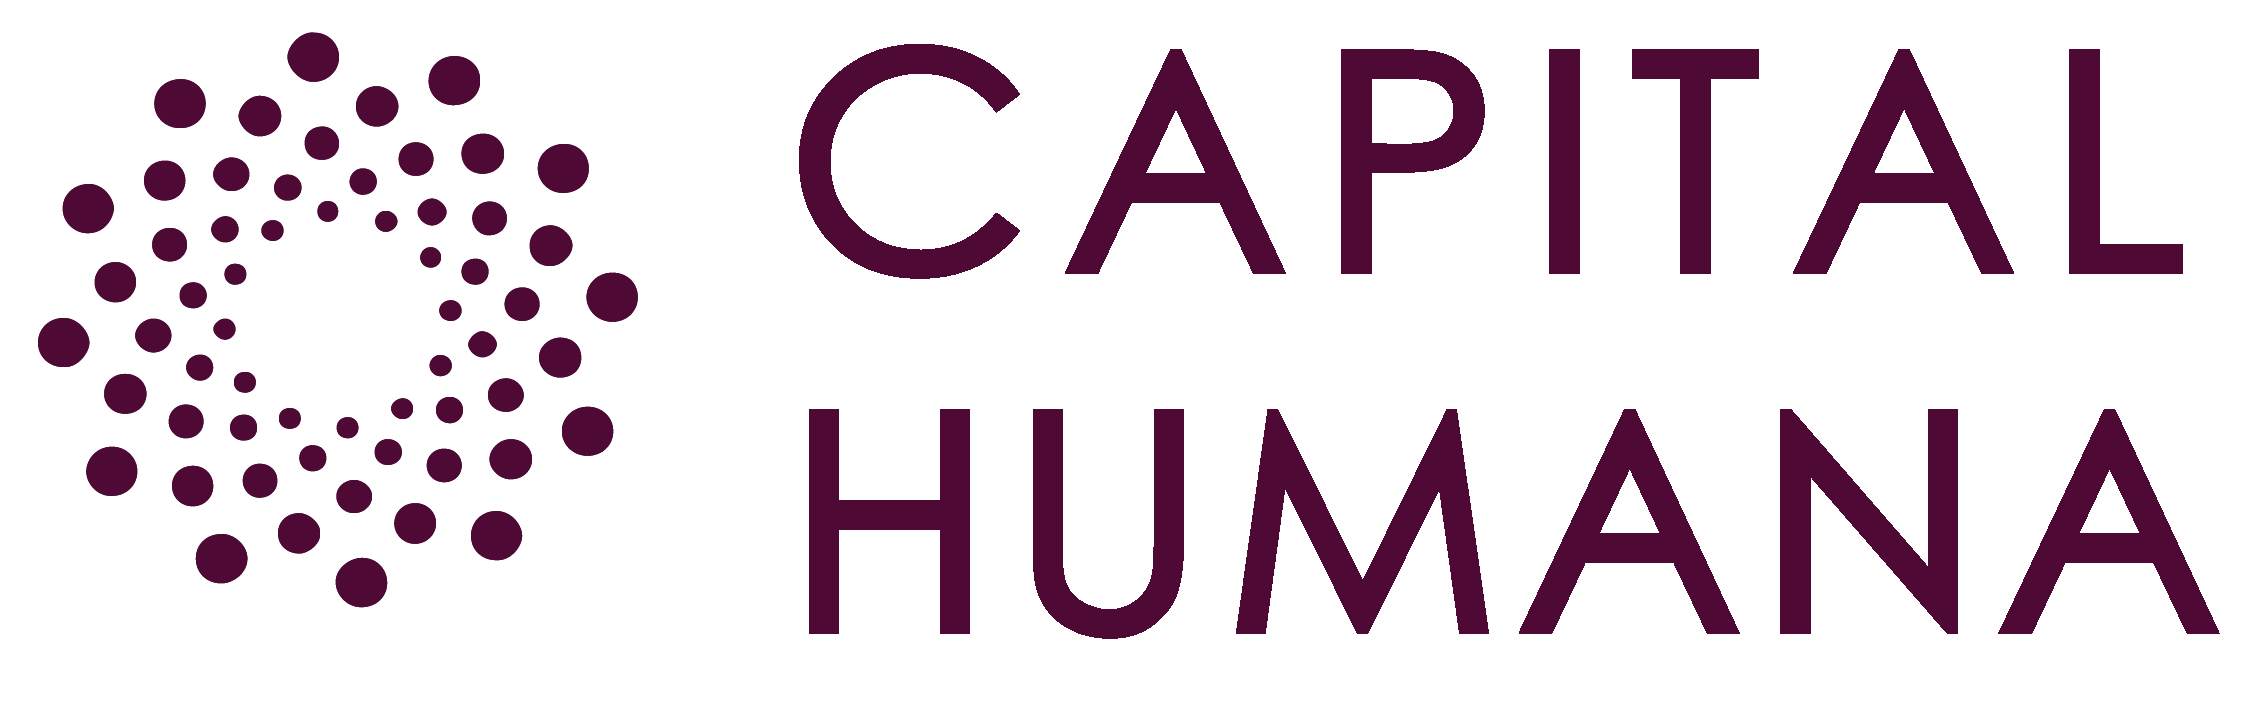 Capital Humana